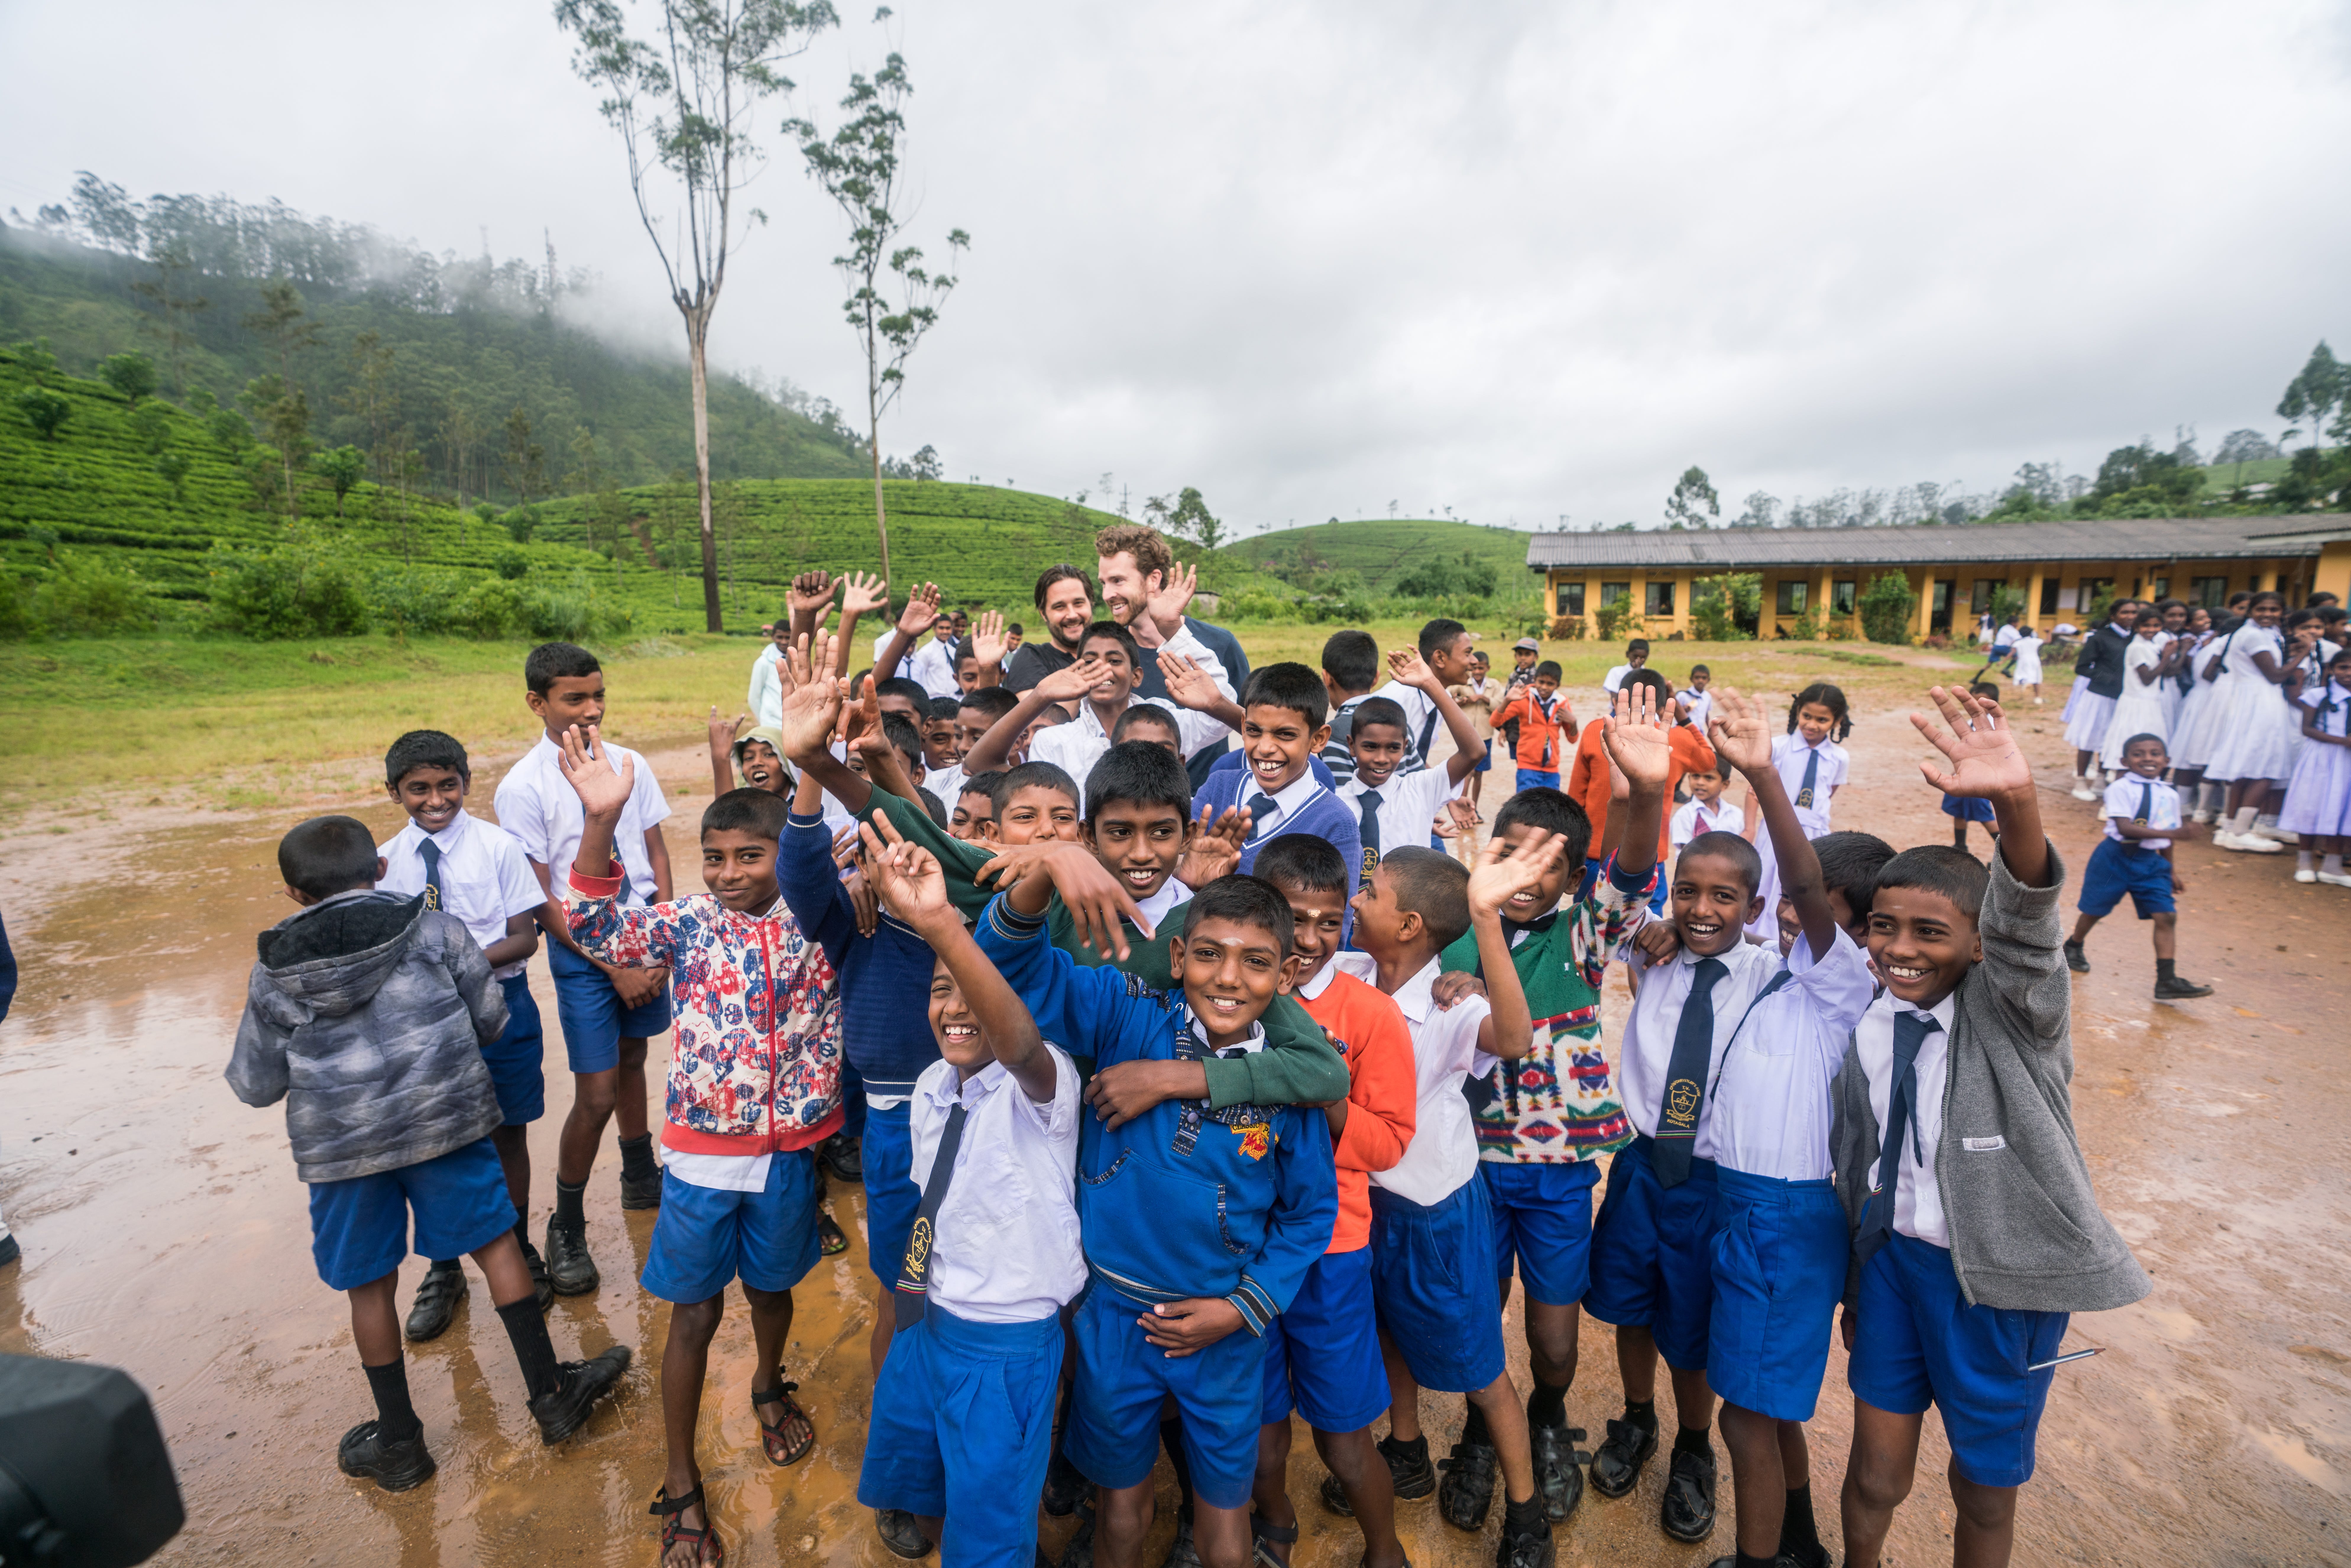  Schoolyard antics in Sri Lanka with Matt Moreau and Kori Chilibeck of The Earth Group